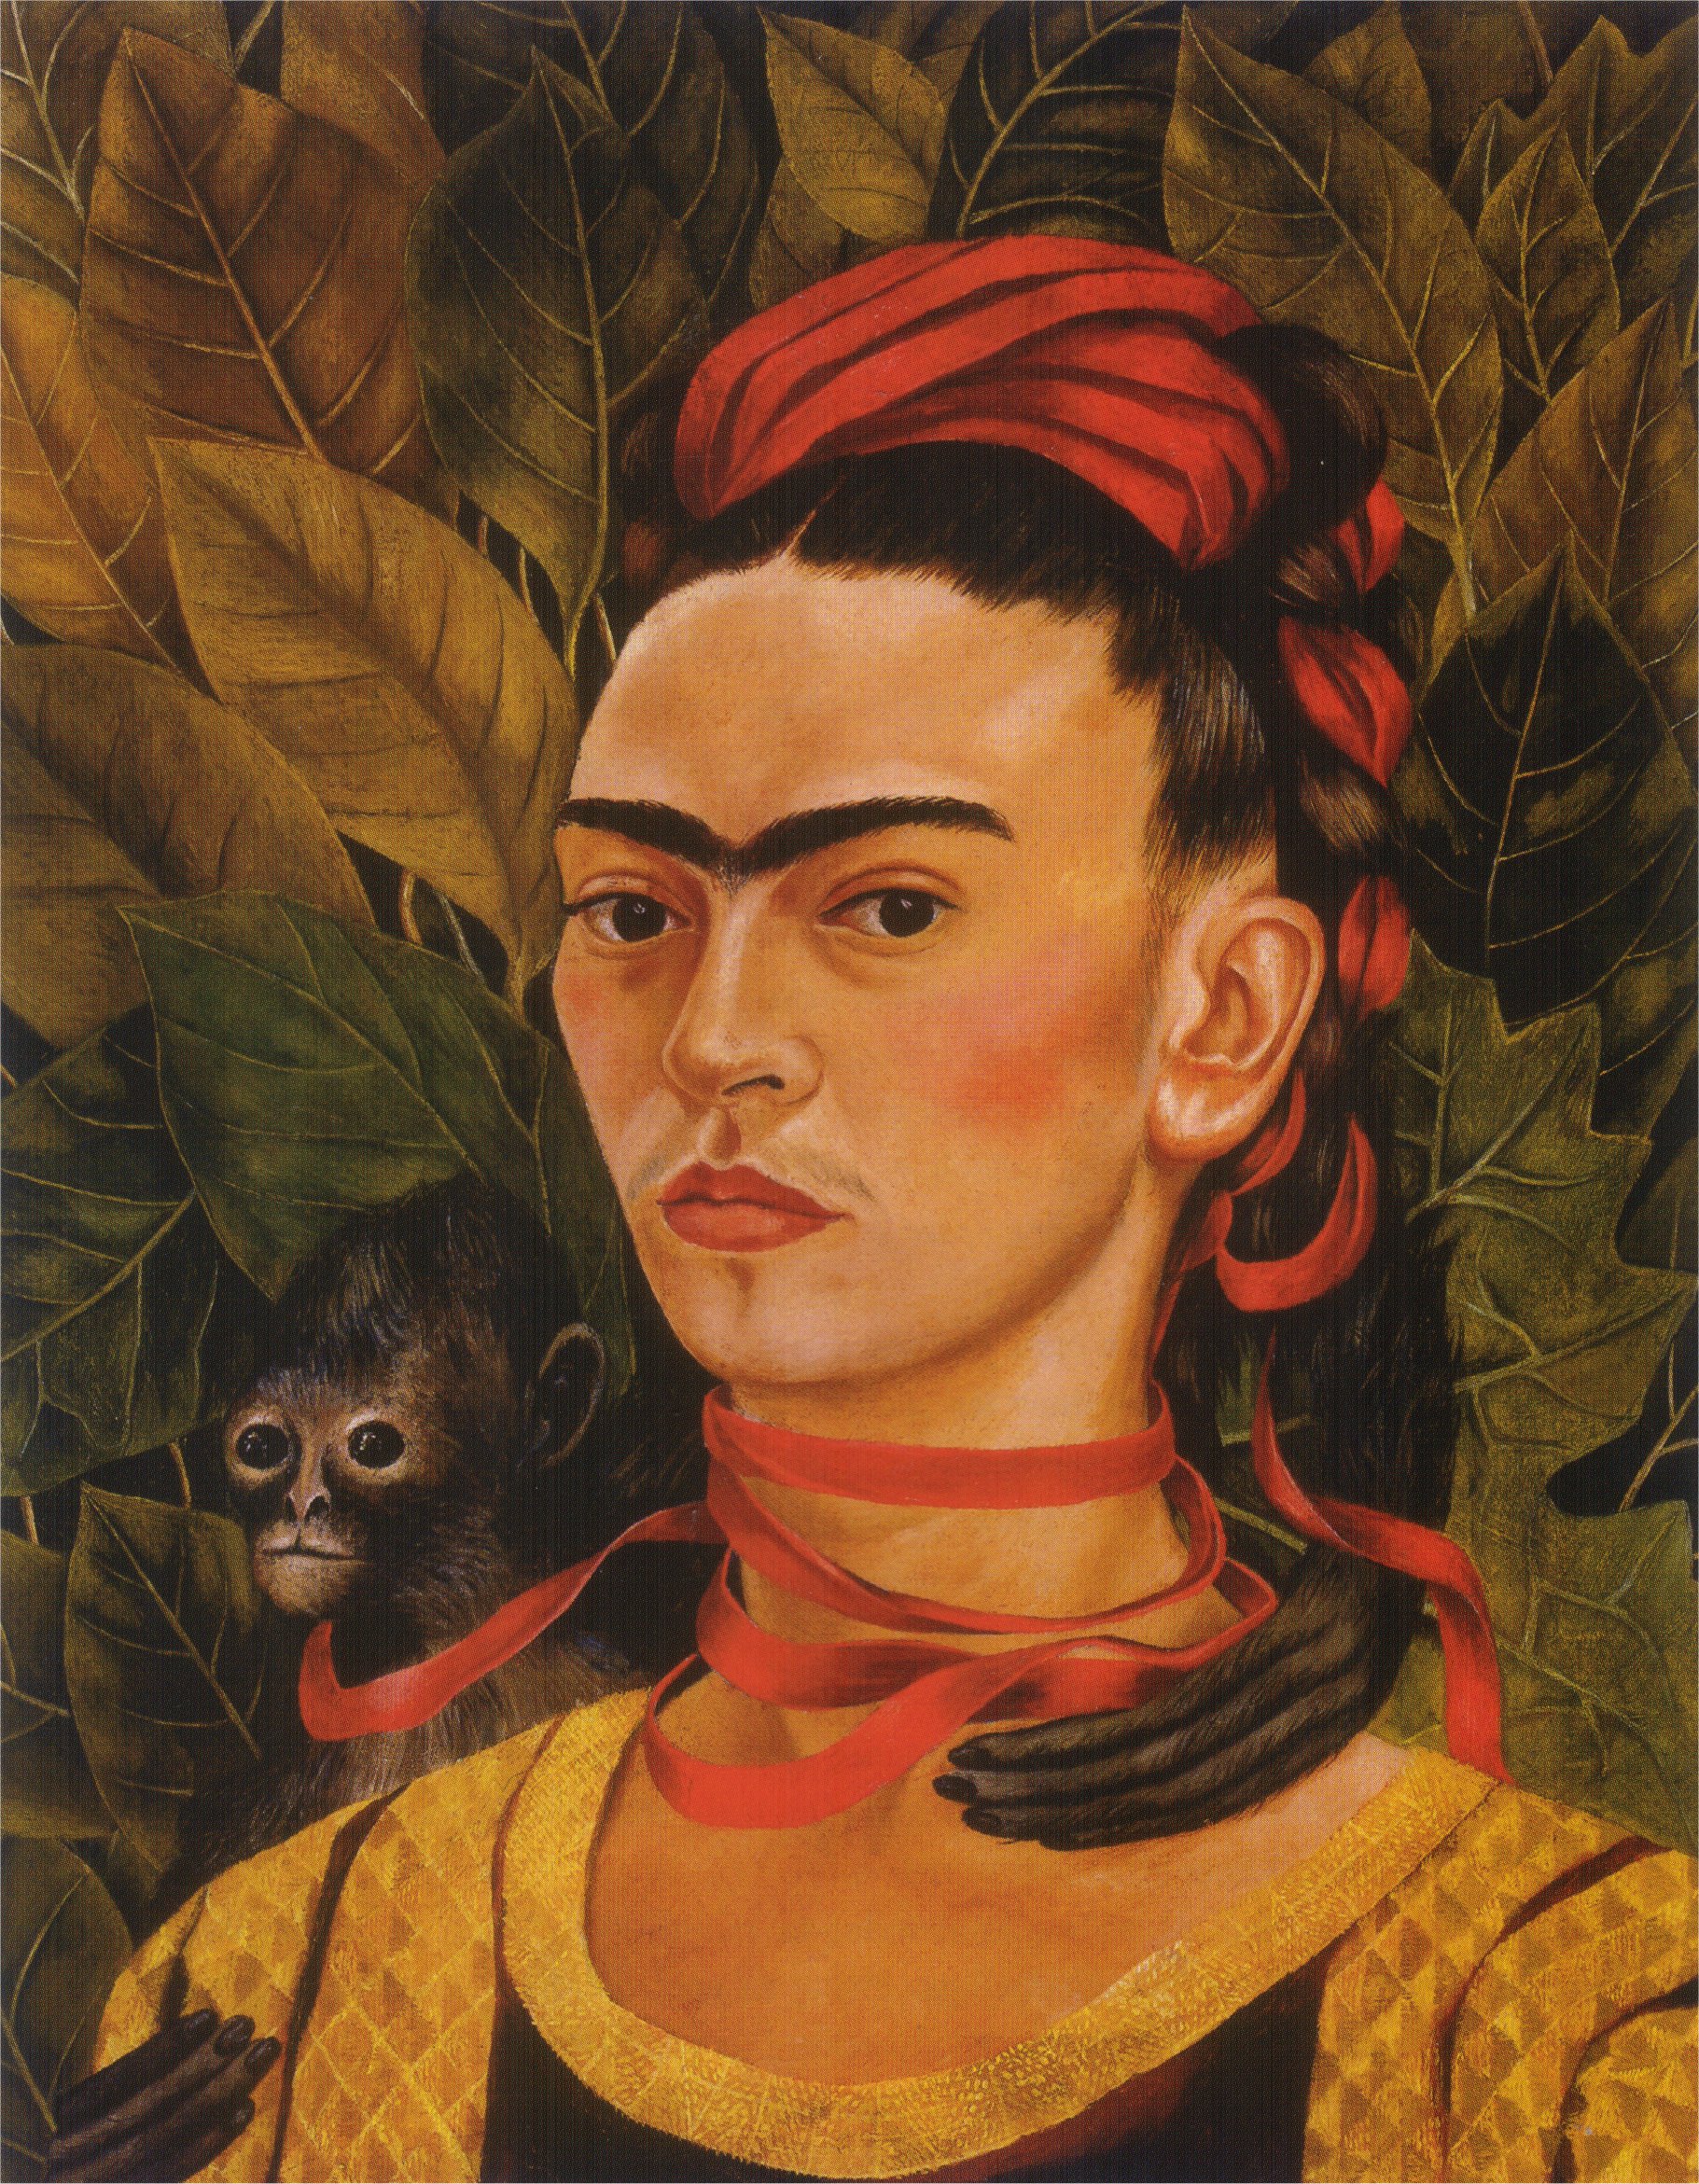 Moustache Lifestyle Research: Frida Kahlo | This Is Not A Moustache